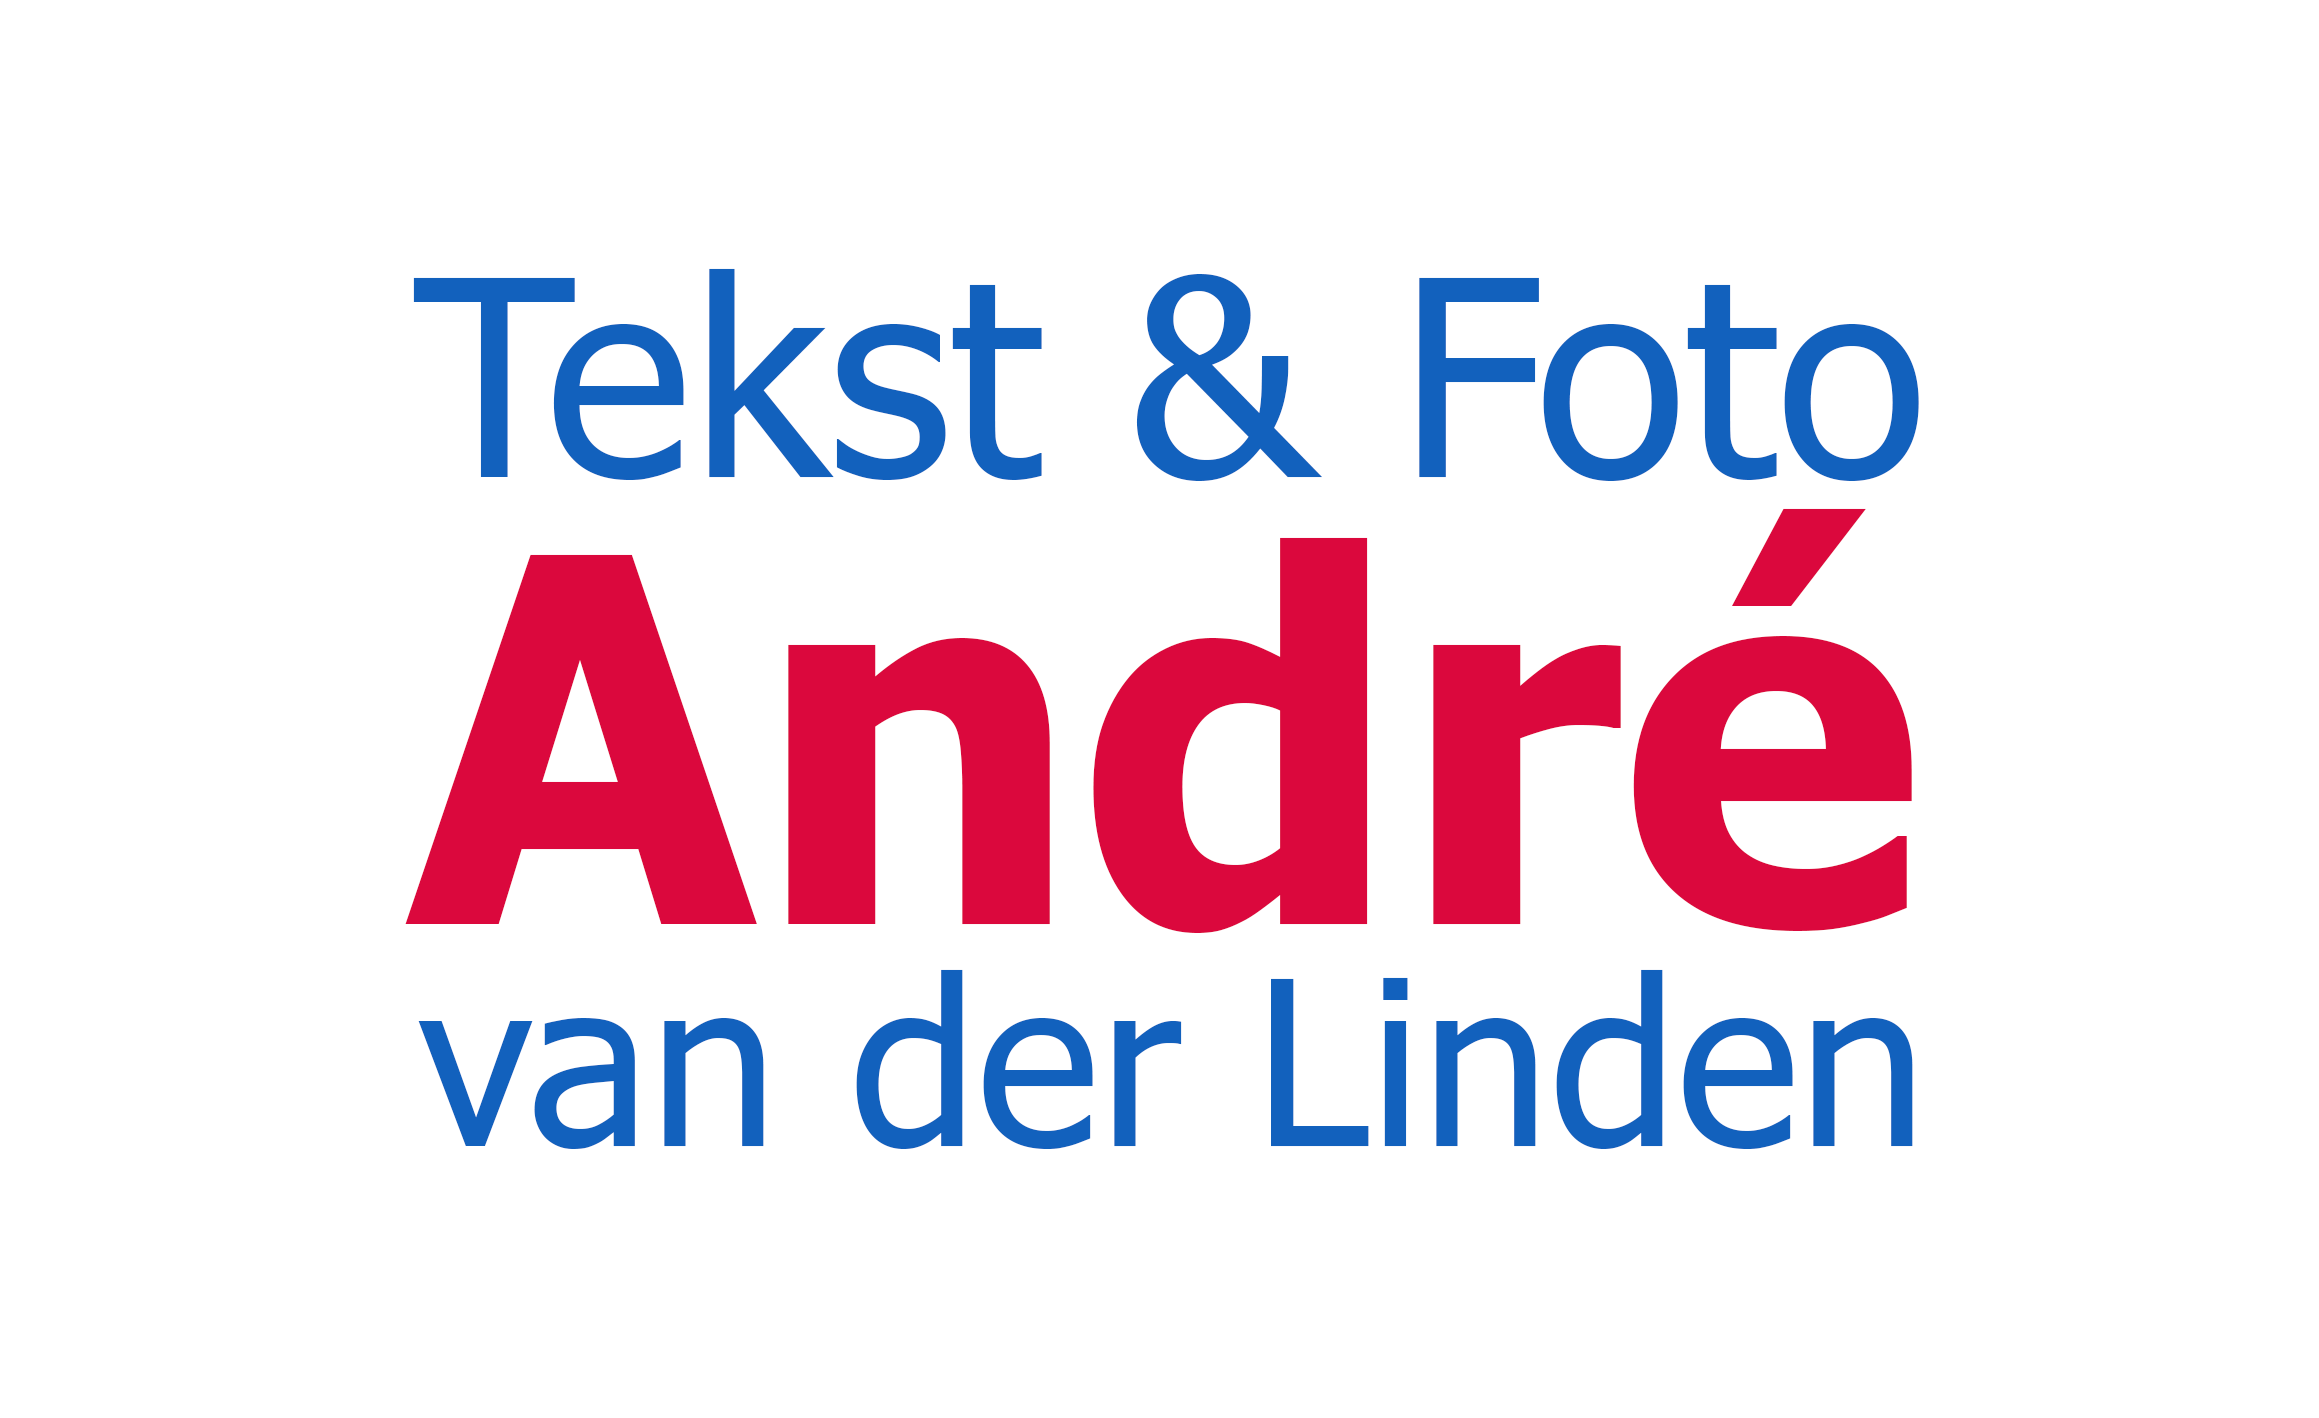 Tekst & Foto Andr van der Linden